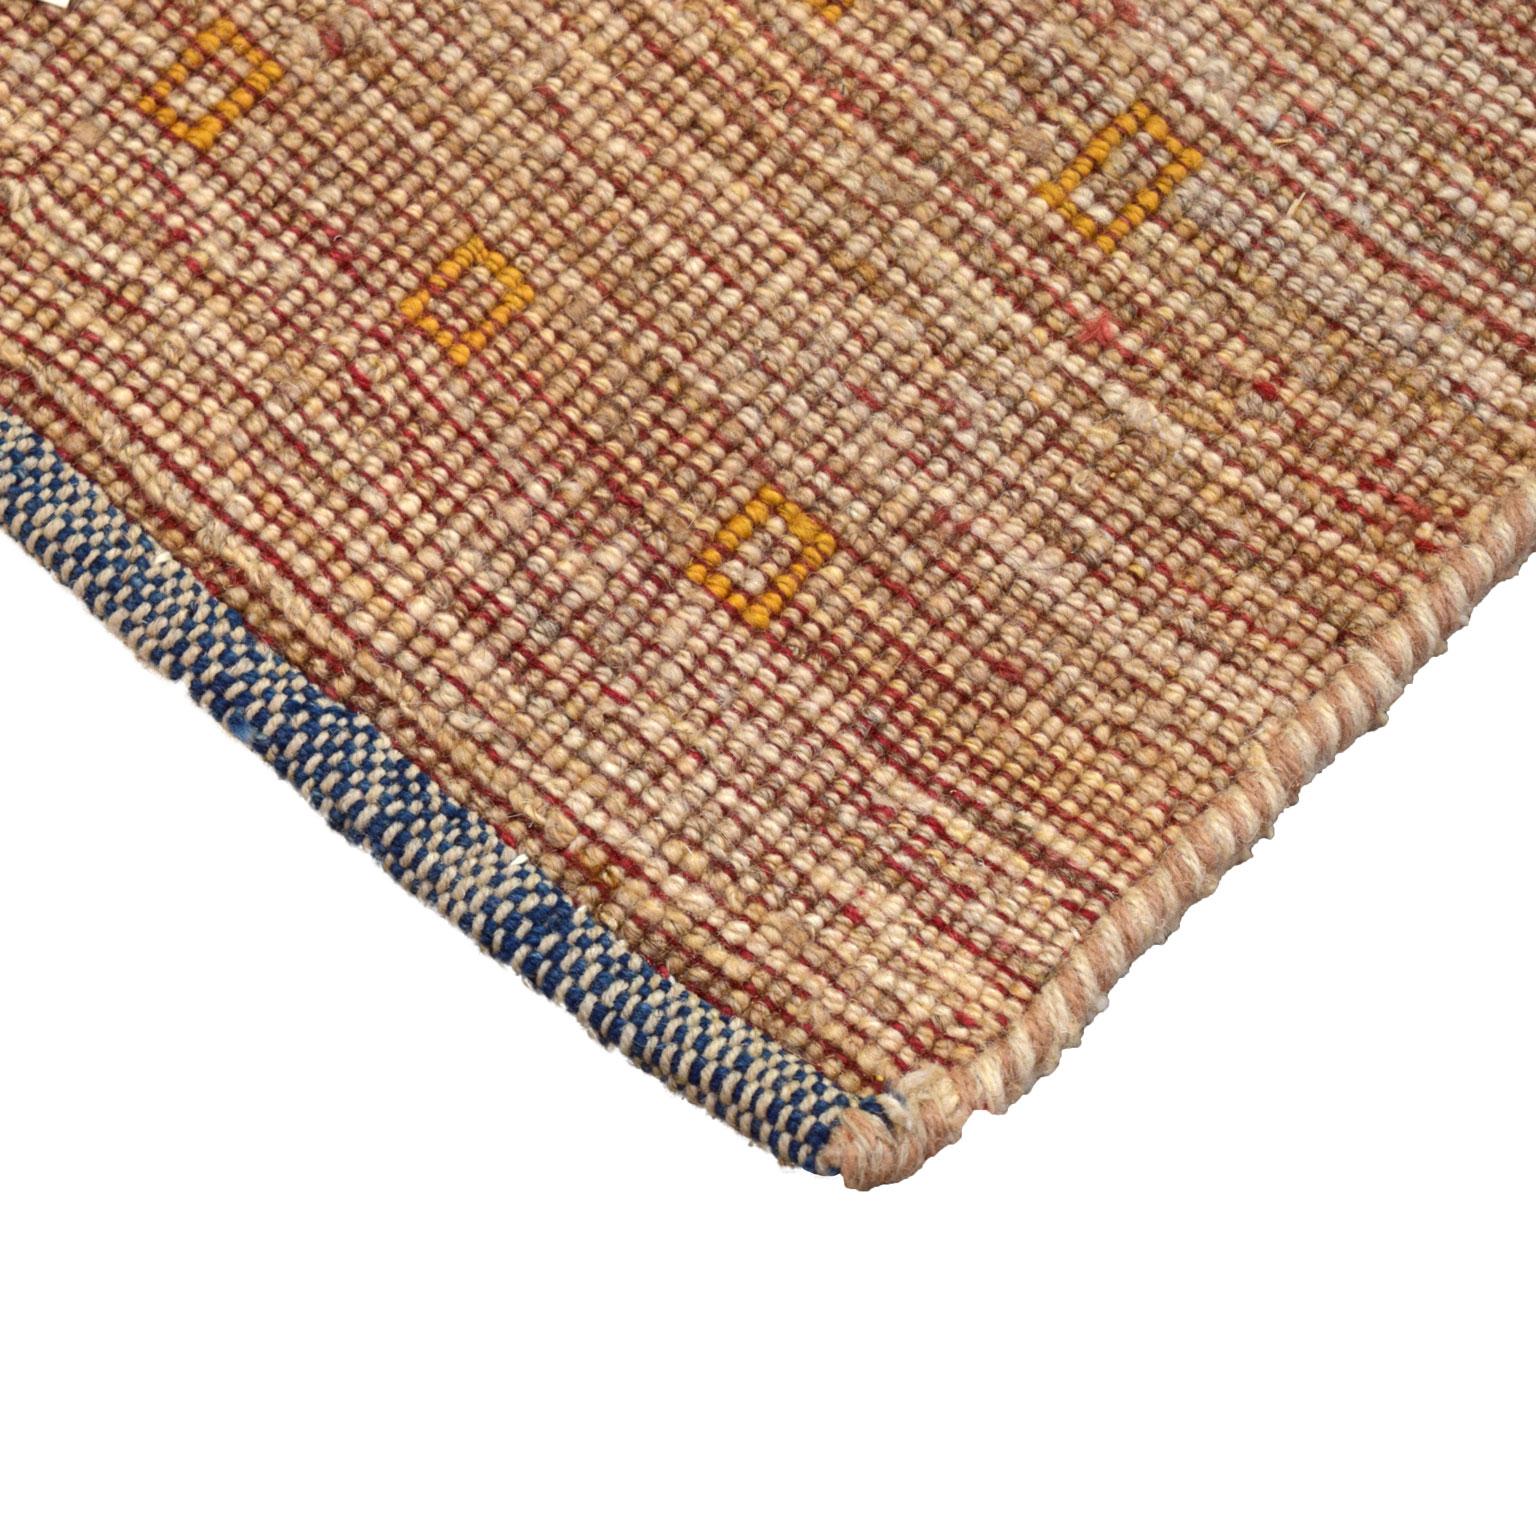 Tribal Neutral Wool Gabbeh Rug, 1’ x 2’ For Sale